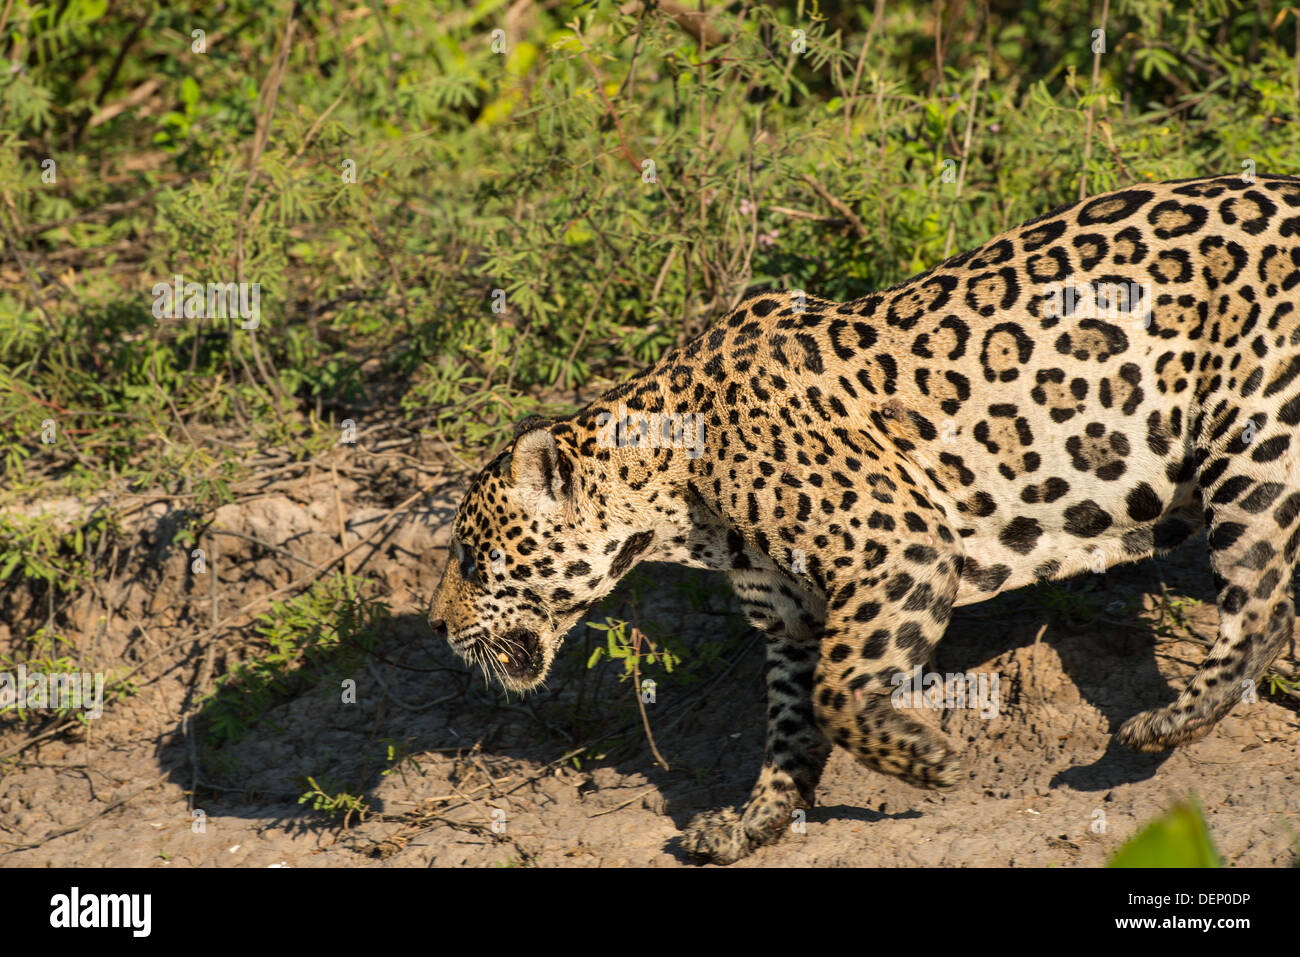 Stock Foto von einem Jaguar stalking Beute, Pantanal, Brasilien. Stockfoto